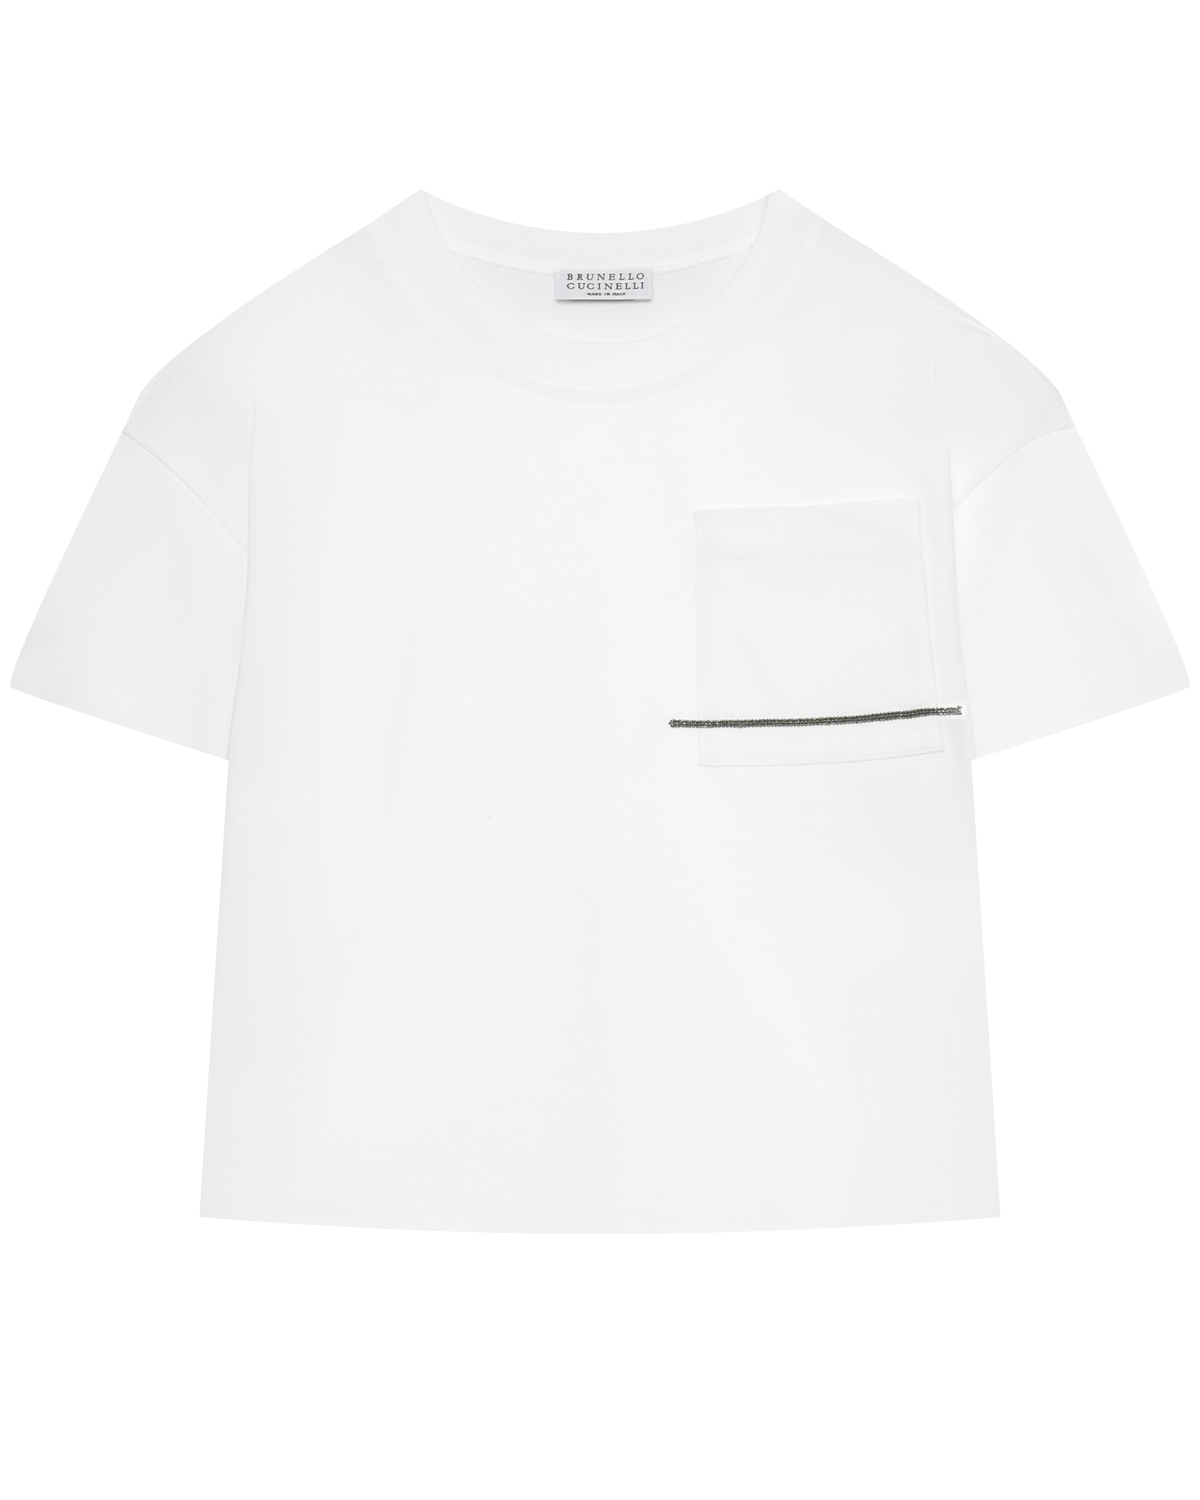 Футболка со стразами на кармане, белая Brunello Cucinelli футболка с контрастной отделкой горловины brunello cucinelli